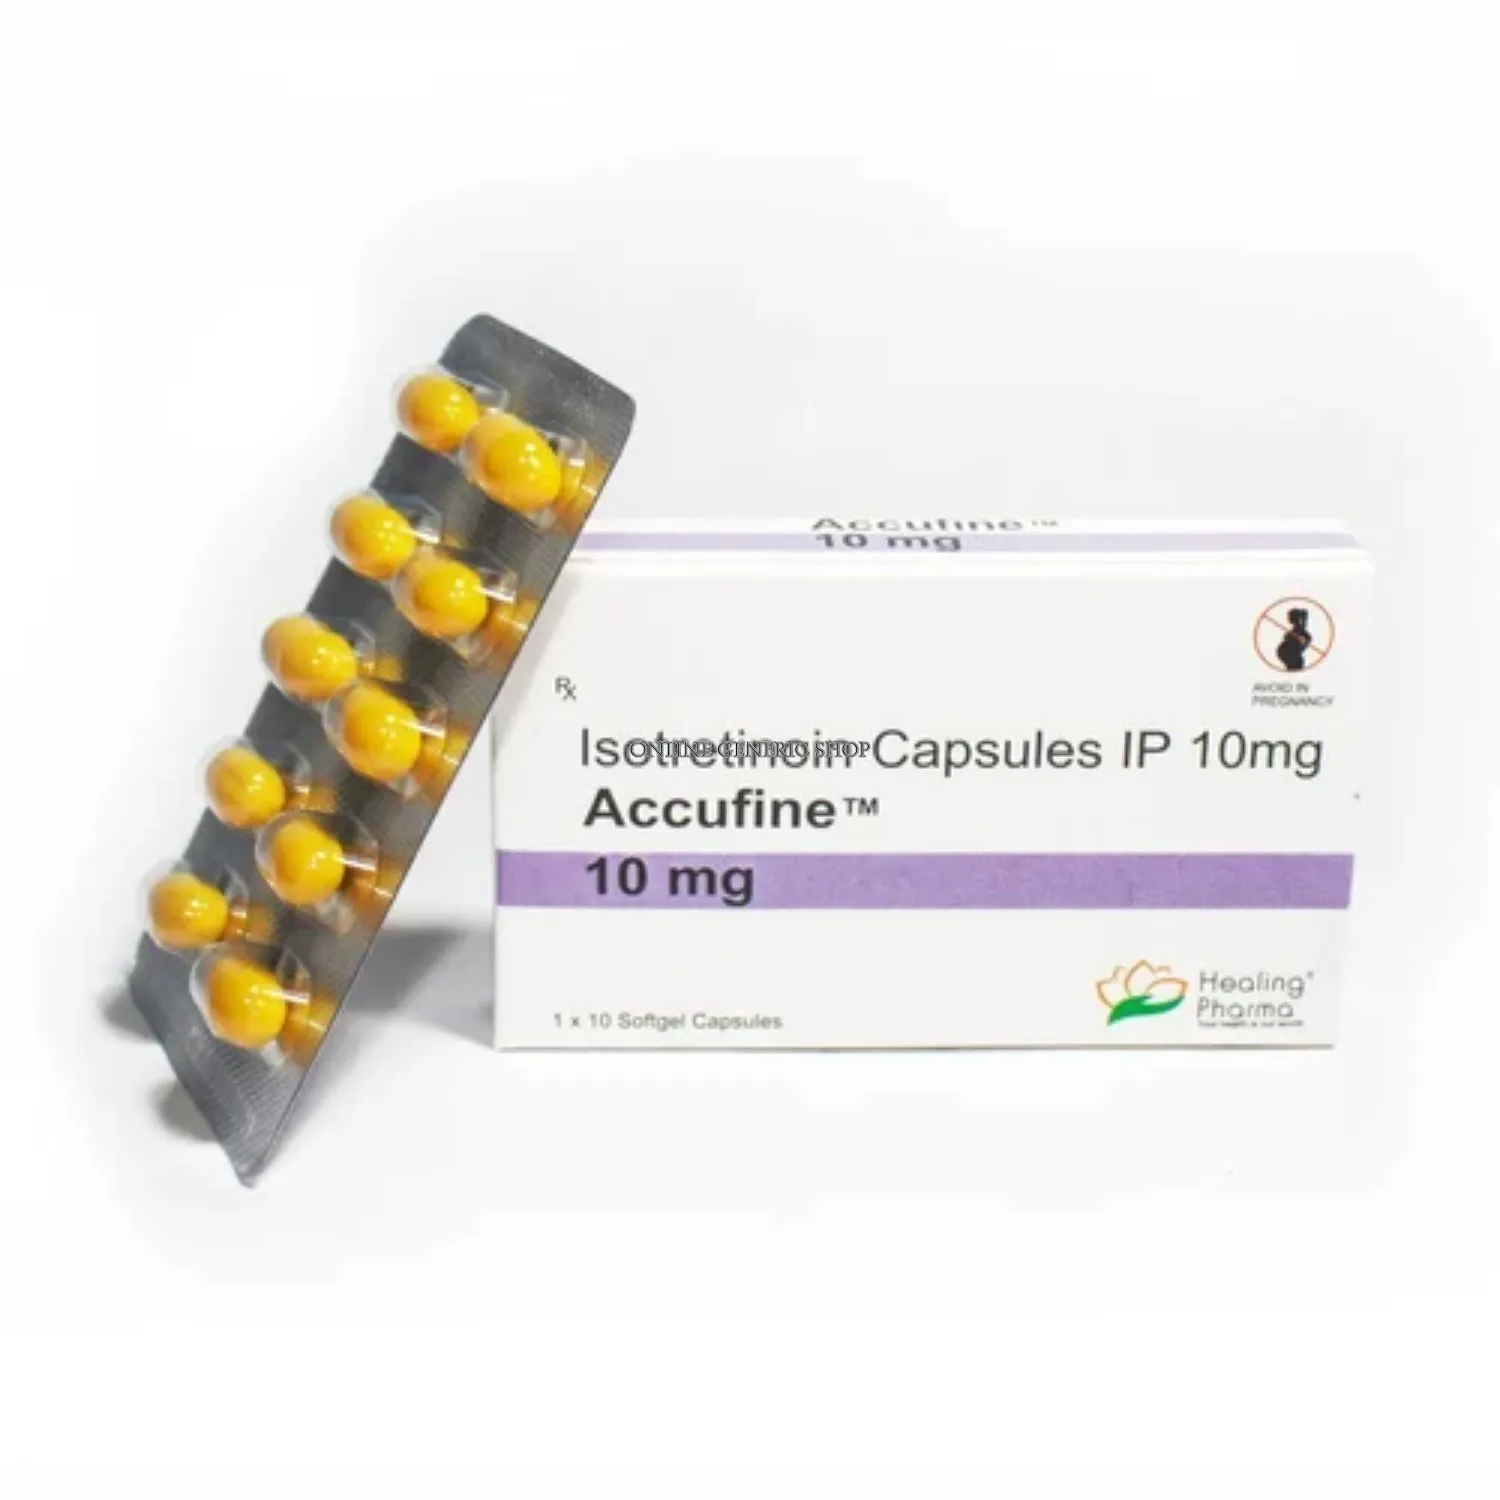 accufine-10-mg                    